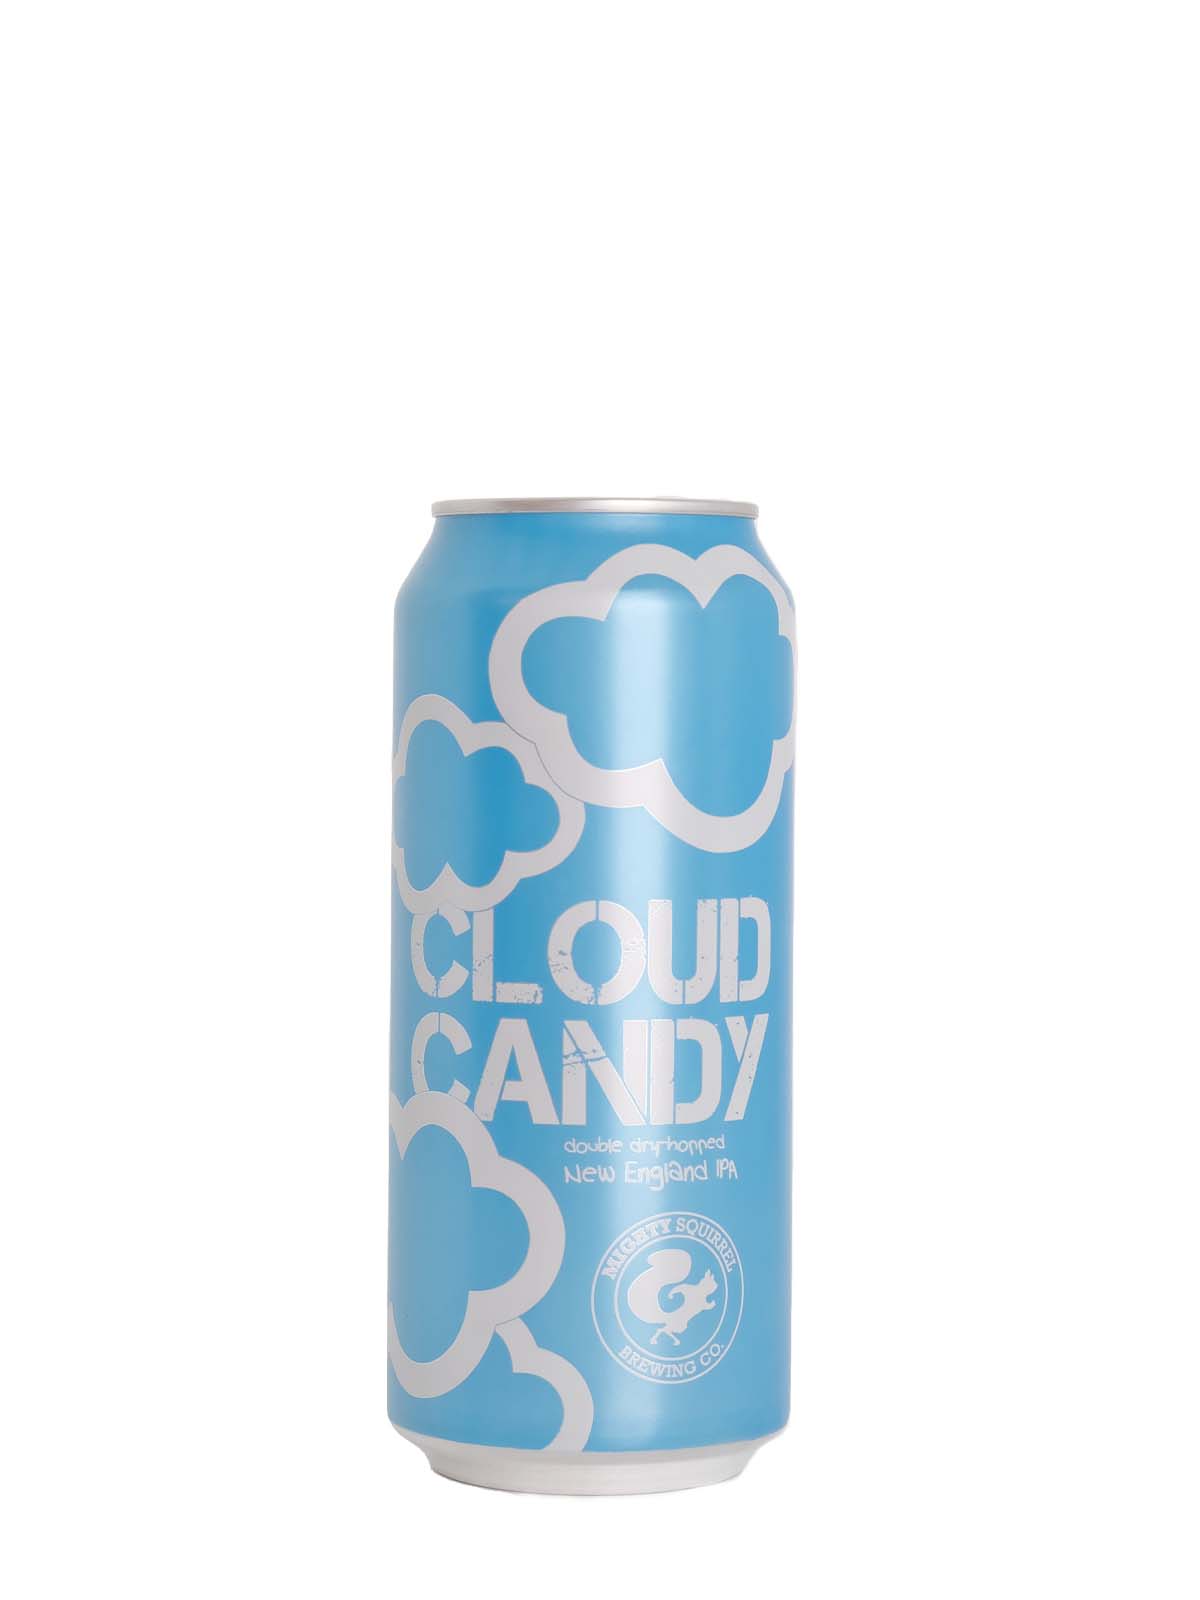 Mighty Squirrel "Cloud Candy" IPA (Waltham, MA)